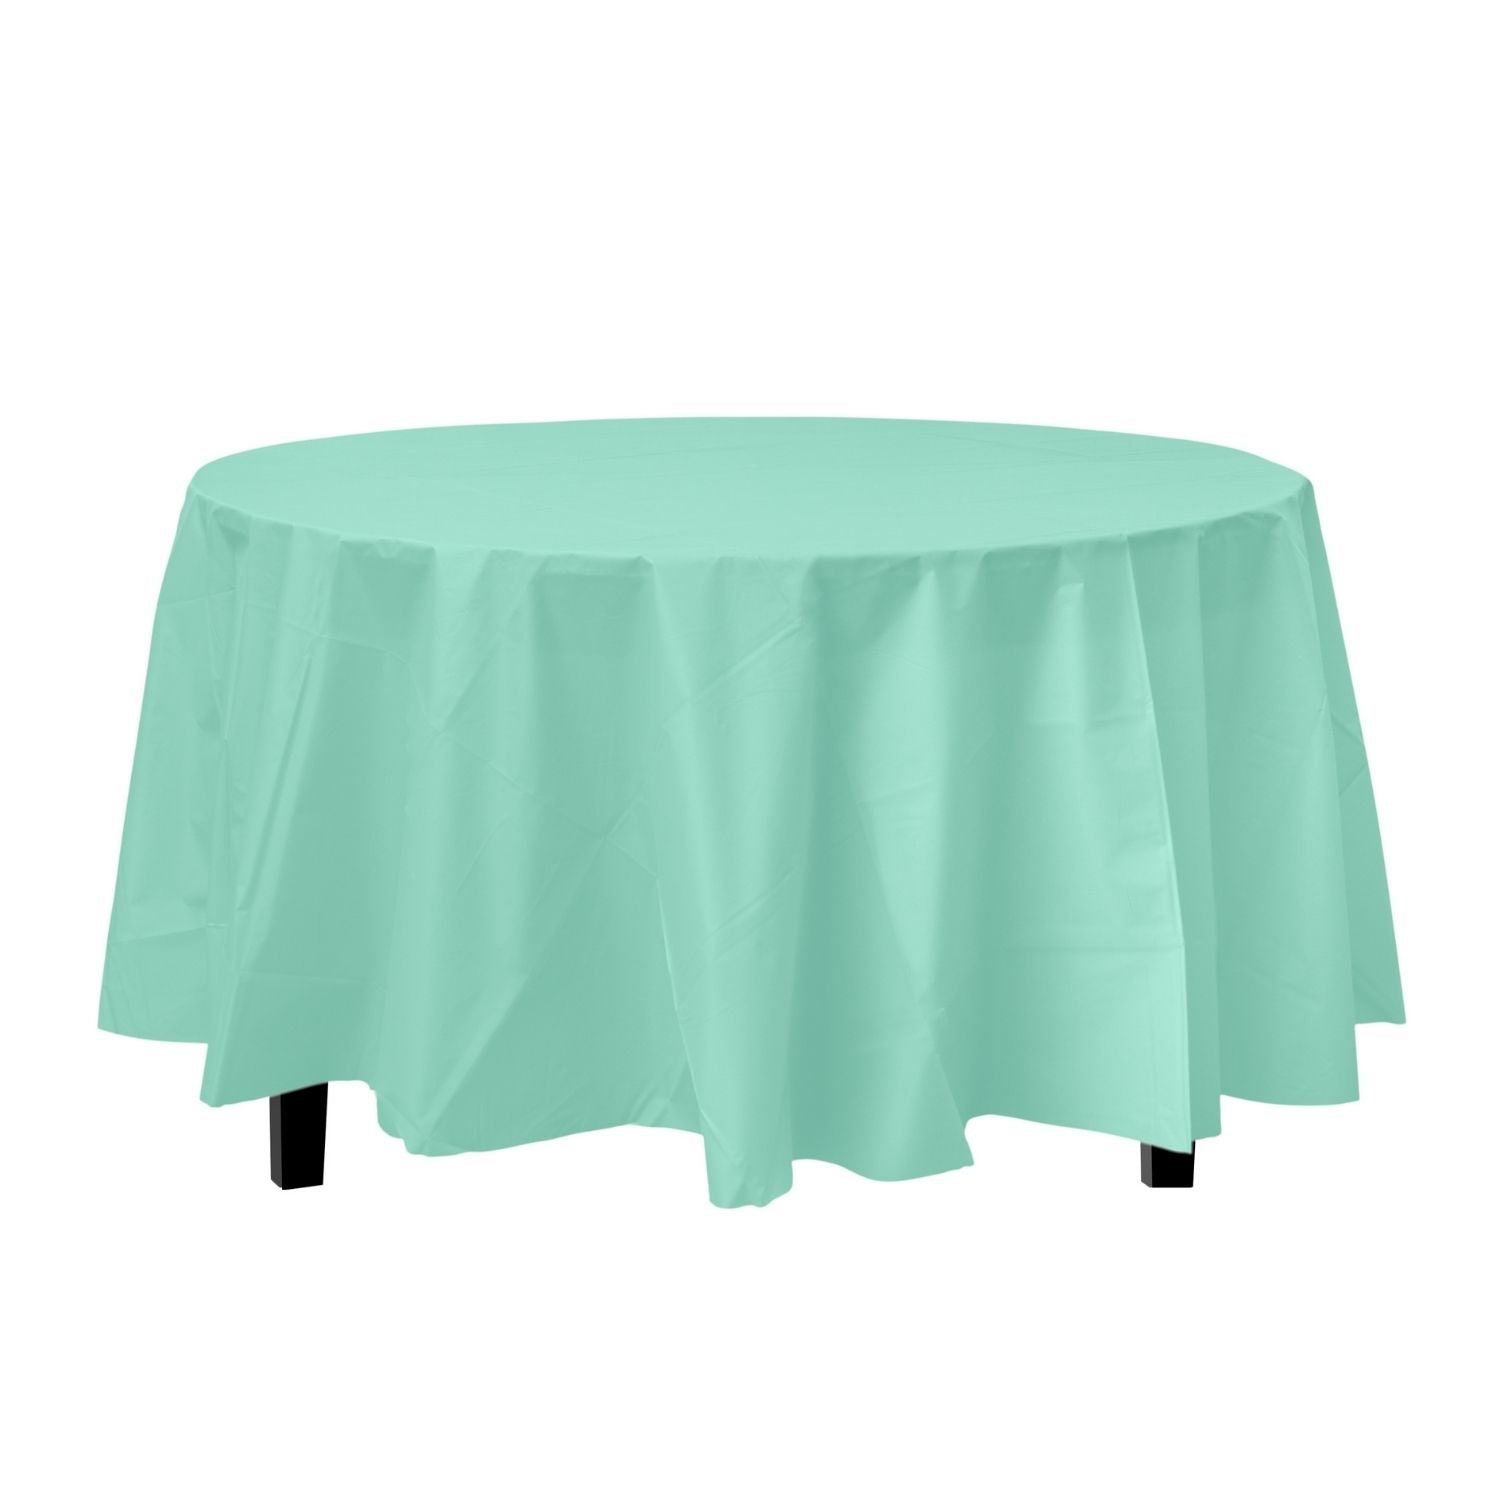 Premium Round Mint Plastic Tablecloth | 96 Count